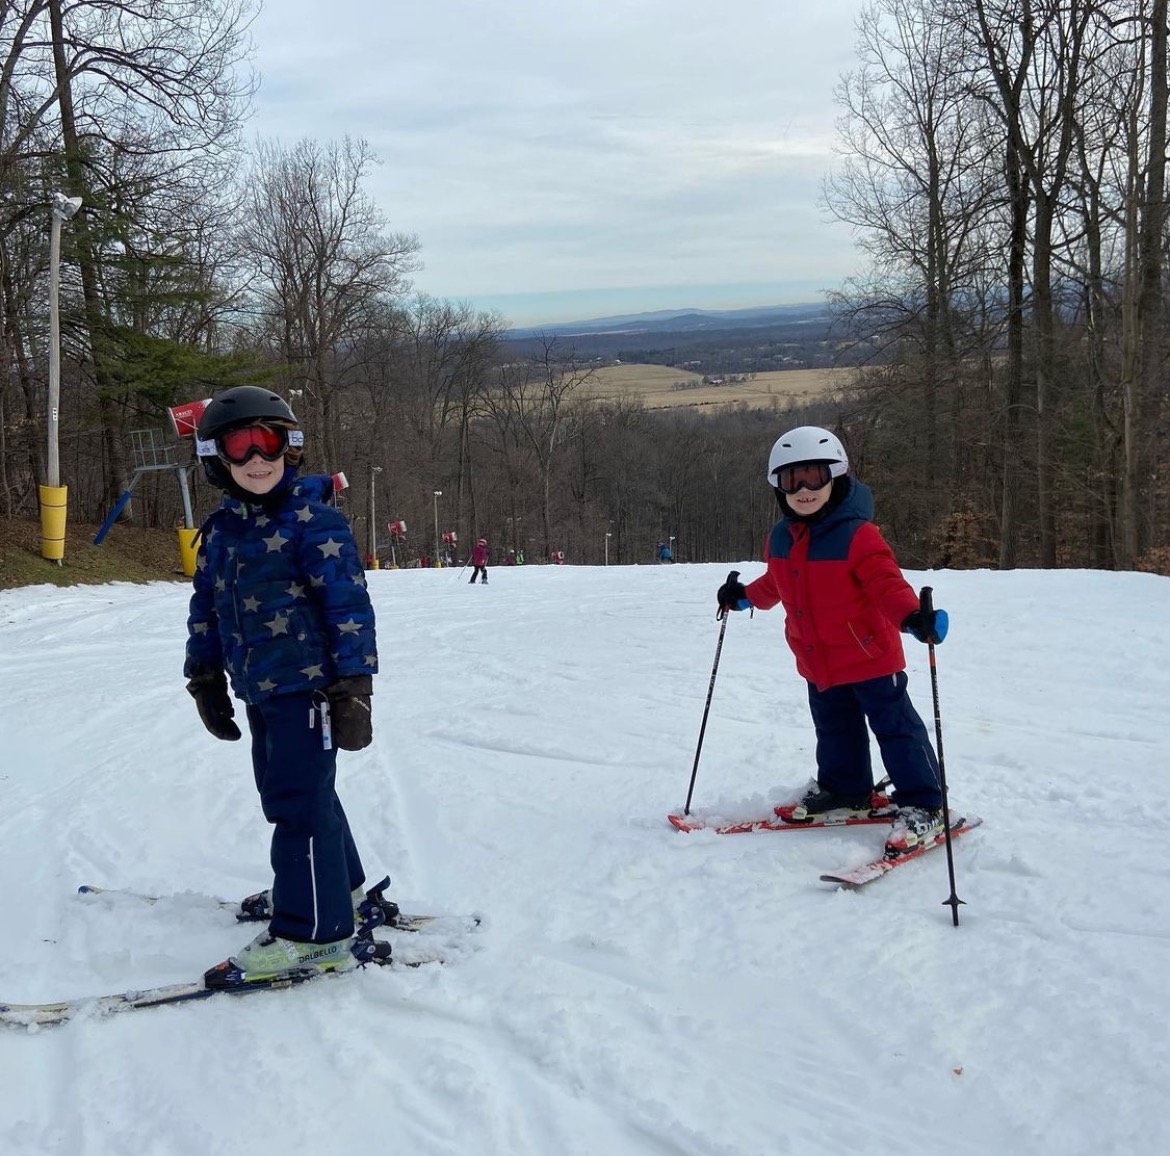 DC Area ski slopes skiing with kids